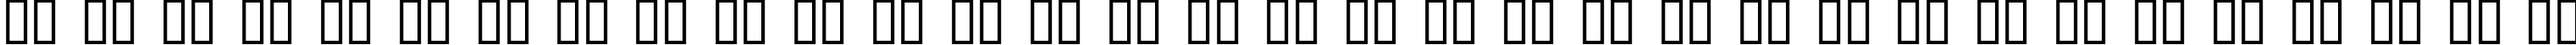 Пример написания русского алфавита шрифтом BN Machine